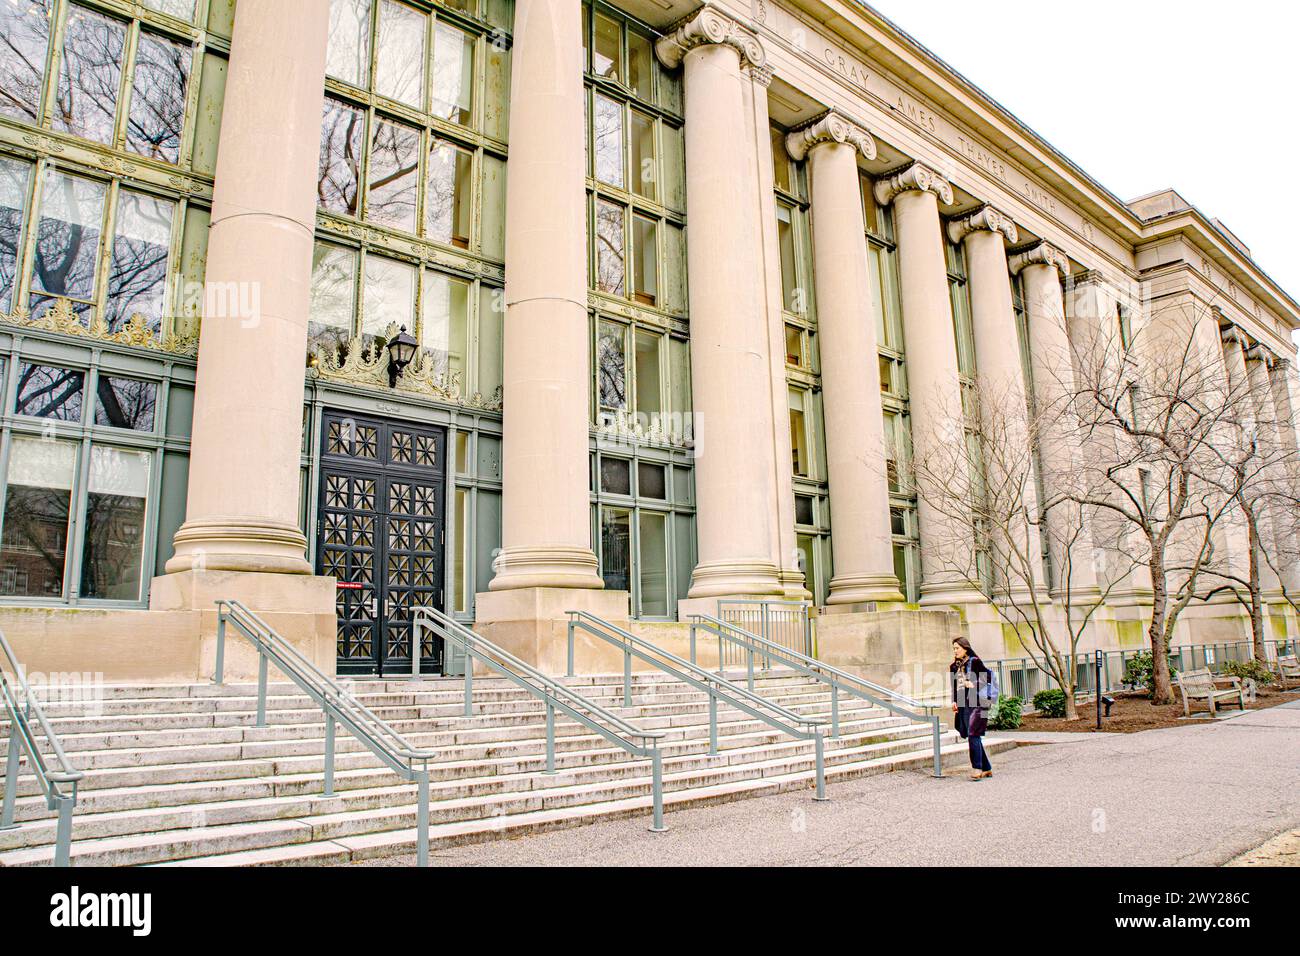 Law School Library, exterior view, Harvard University, Cambridge, Massachusetts, USA Stock Photo